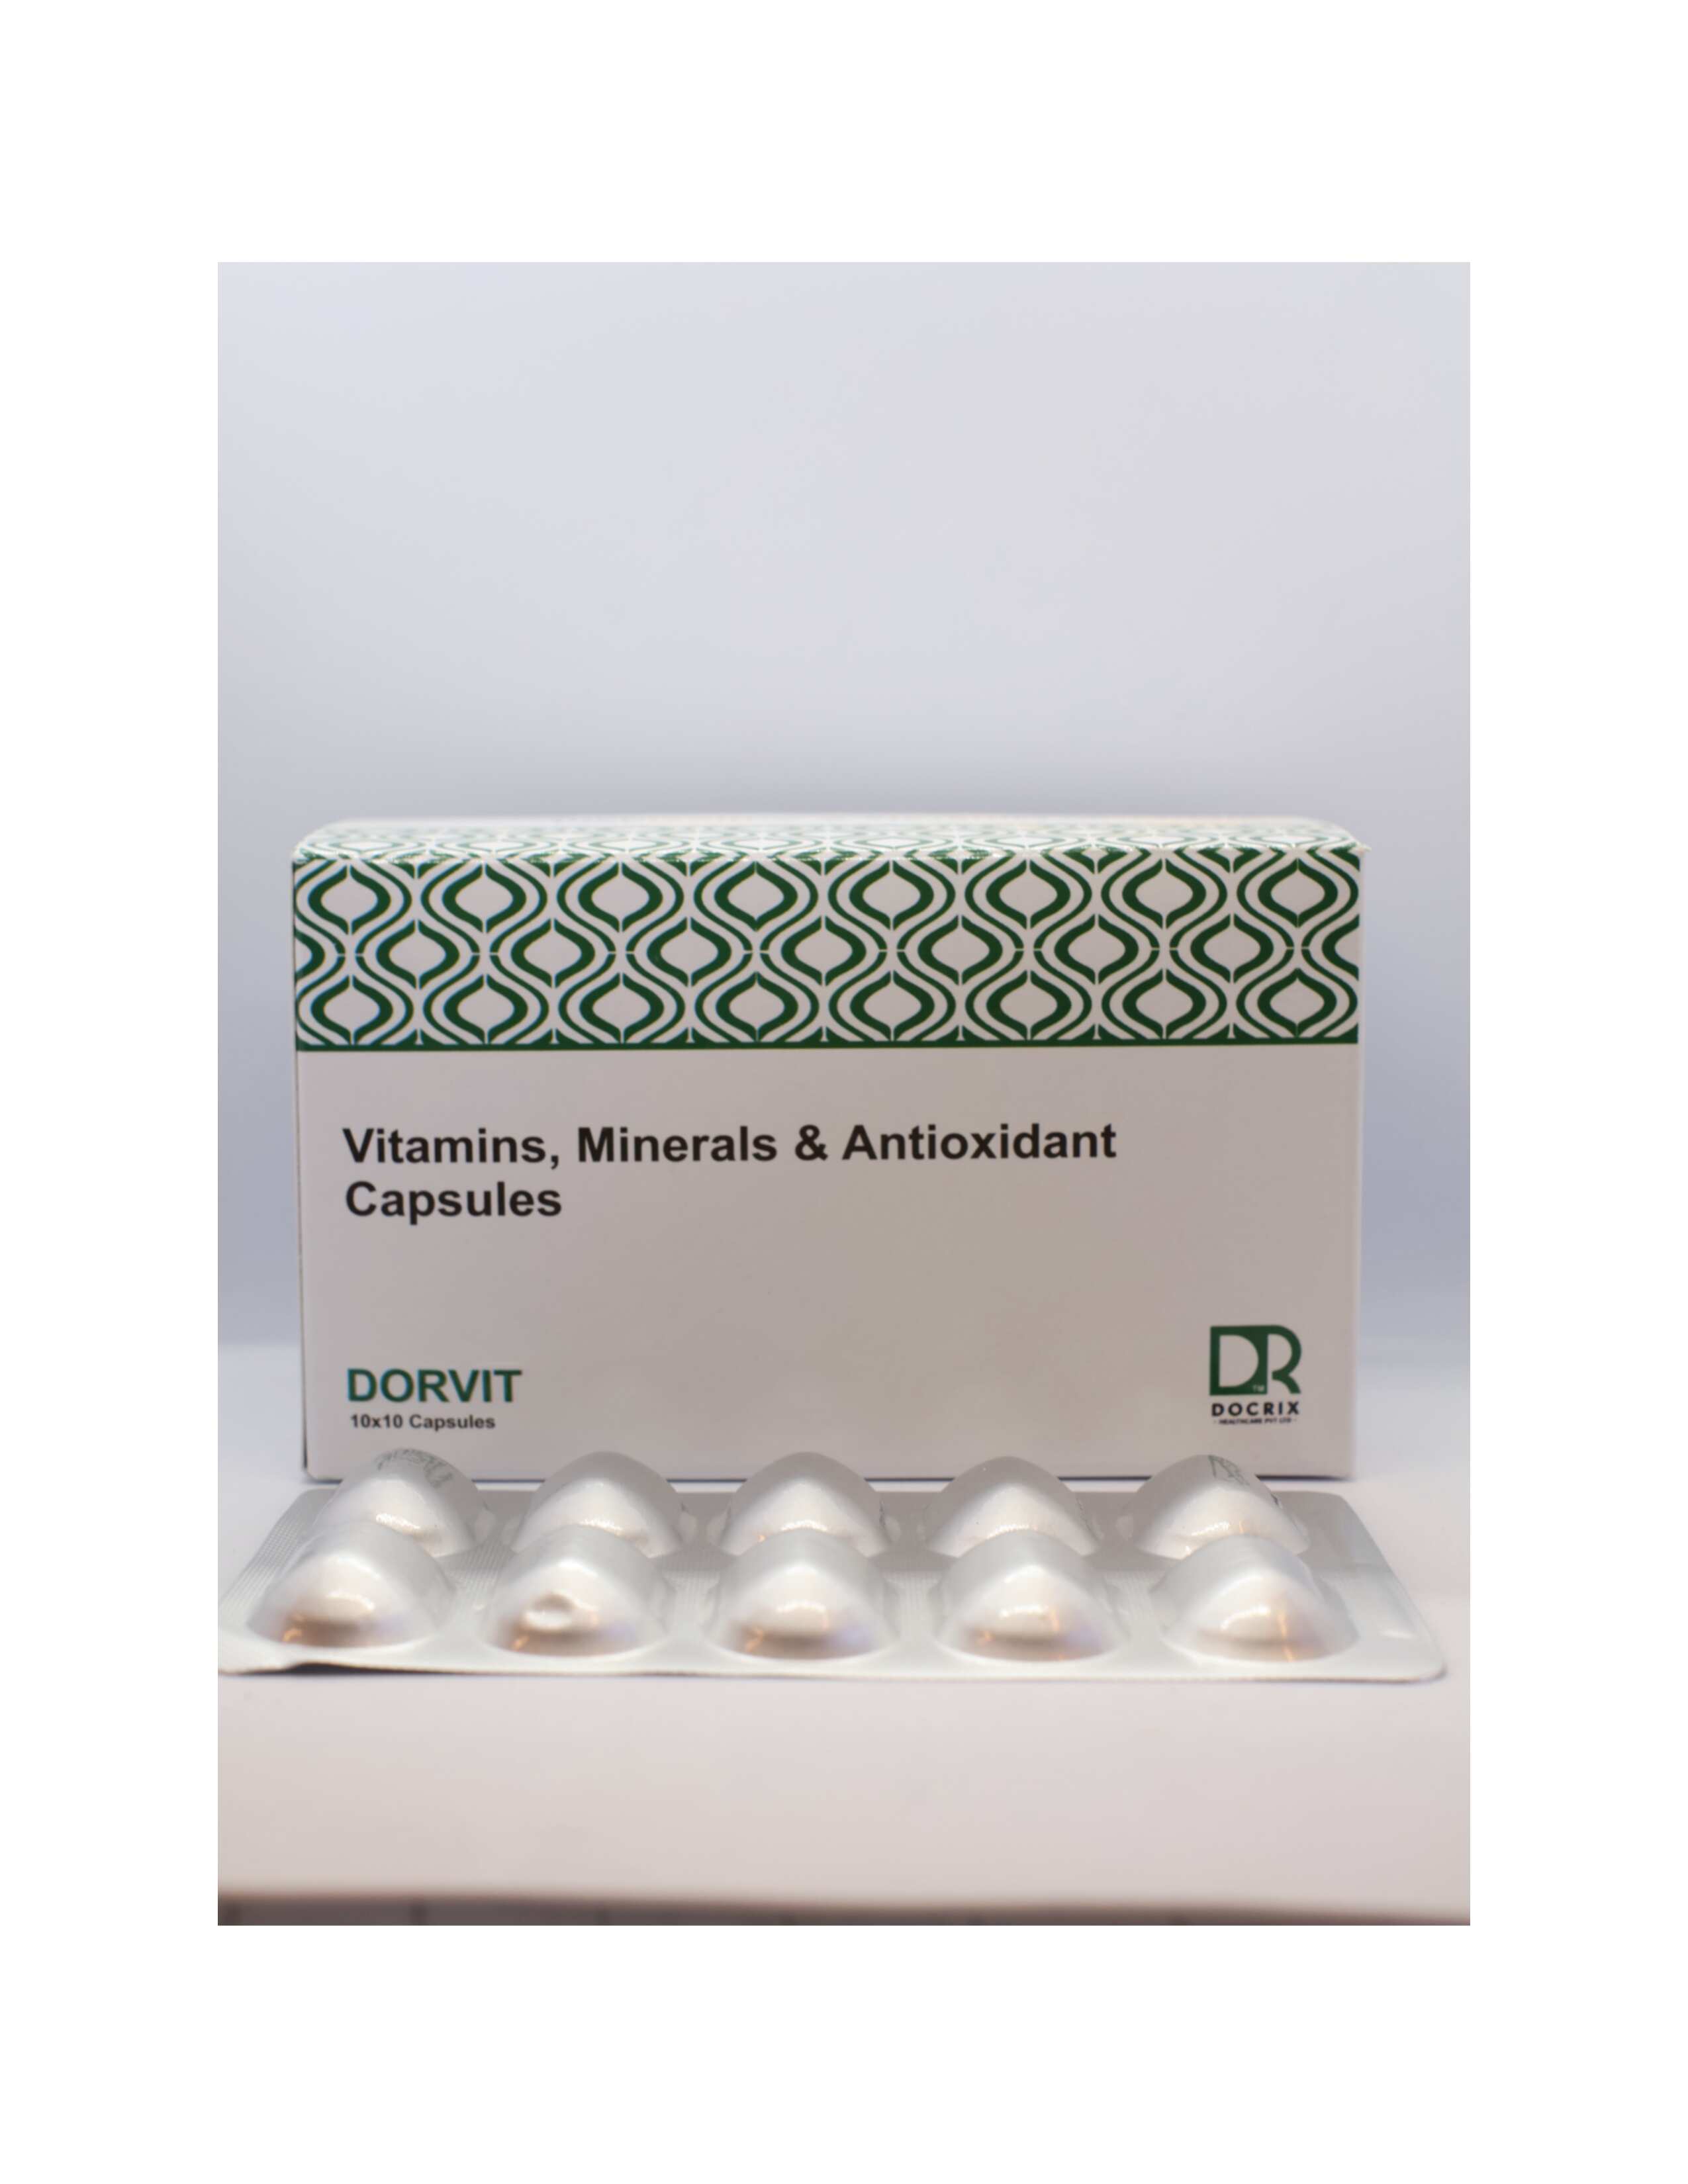 Product Name: Dorvit , Compositions of Dorvit  are vitamins, Minerals & Antioxdant Capsules - Docrix Healthcare